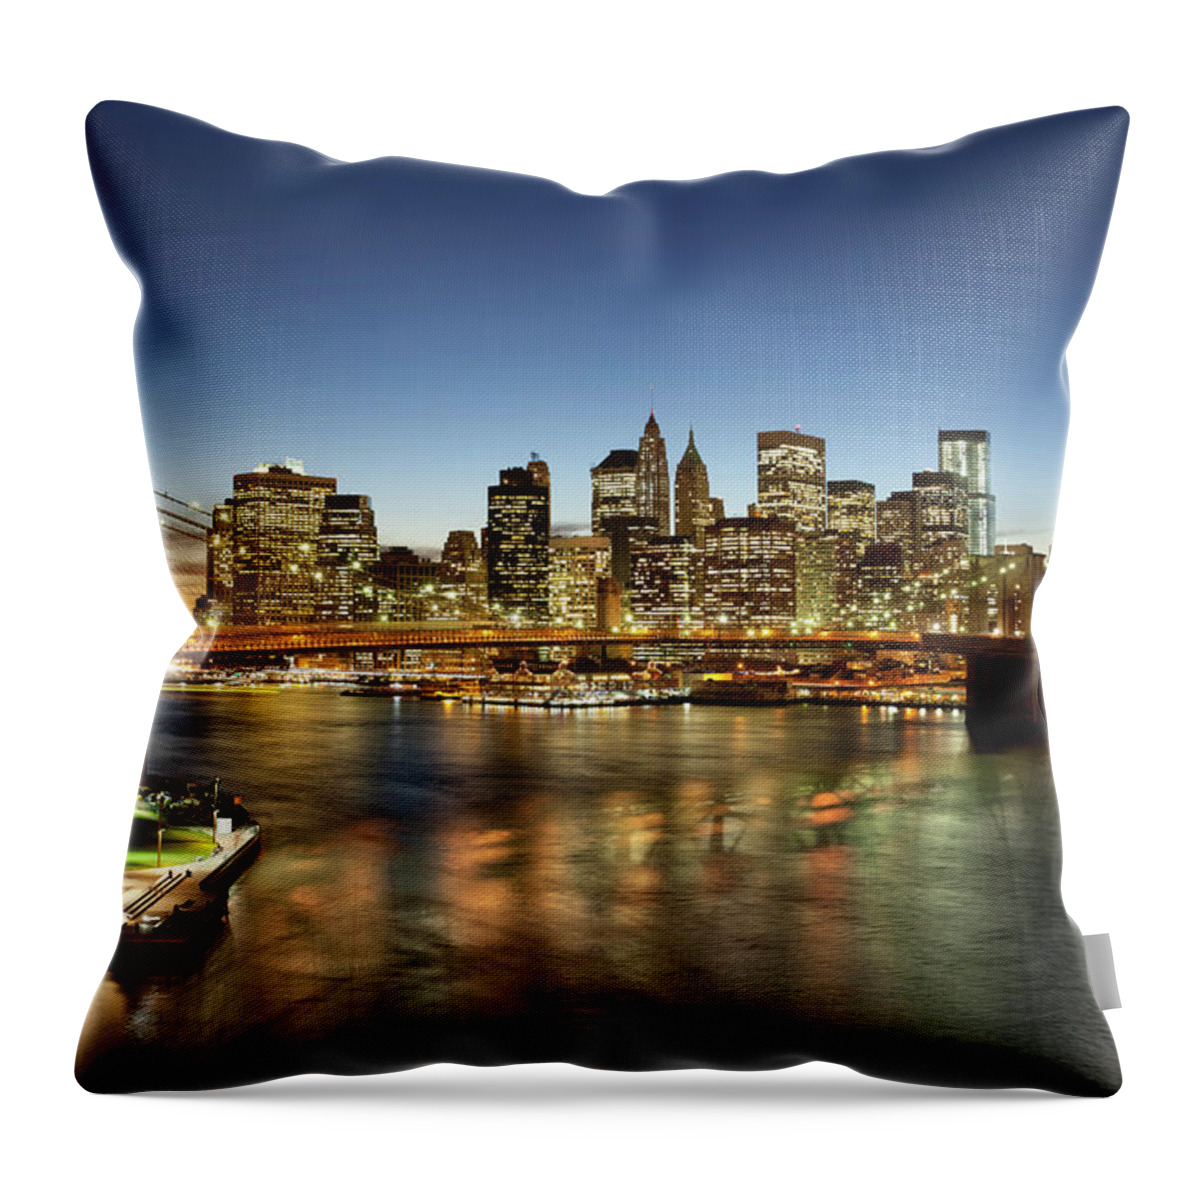 Estock Throw Pillow featuring the digital art Usa, New York, Manhattan Skyline by Massimo Ripani